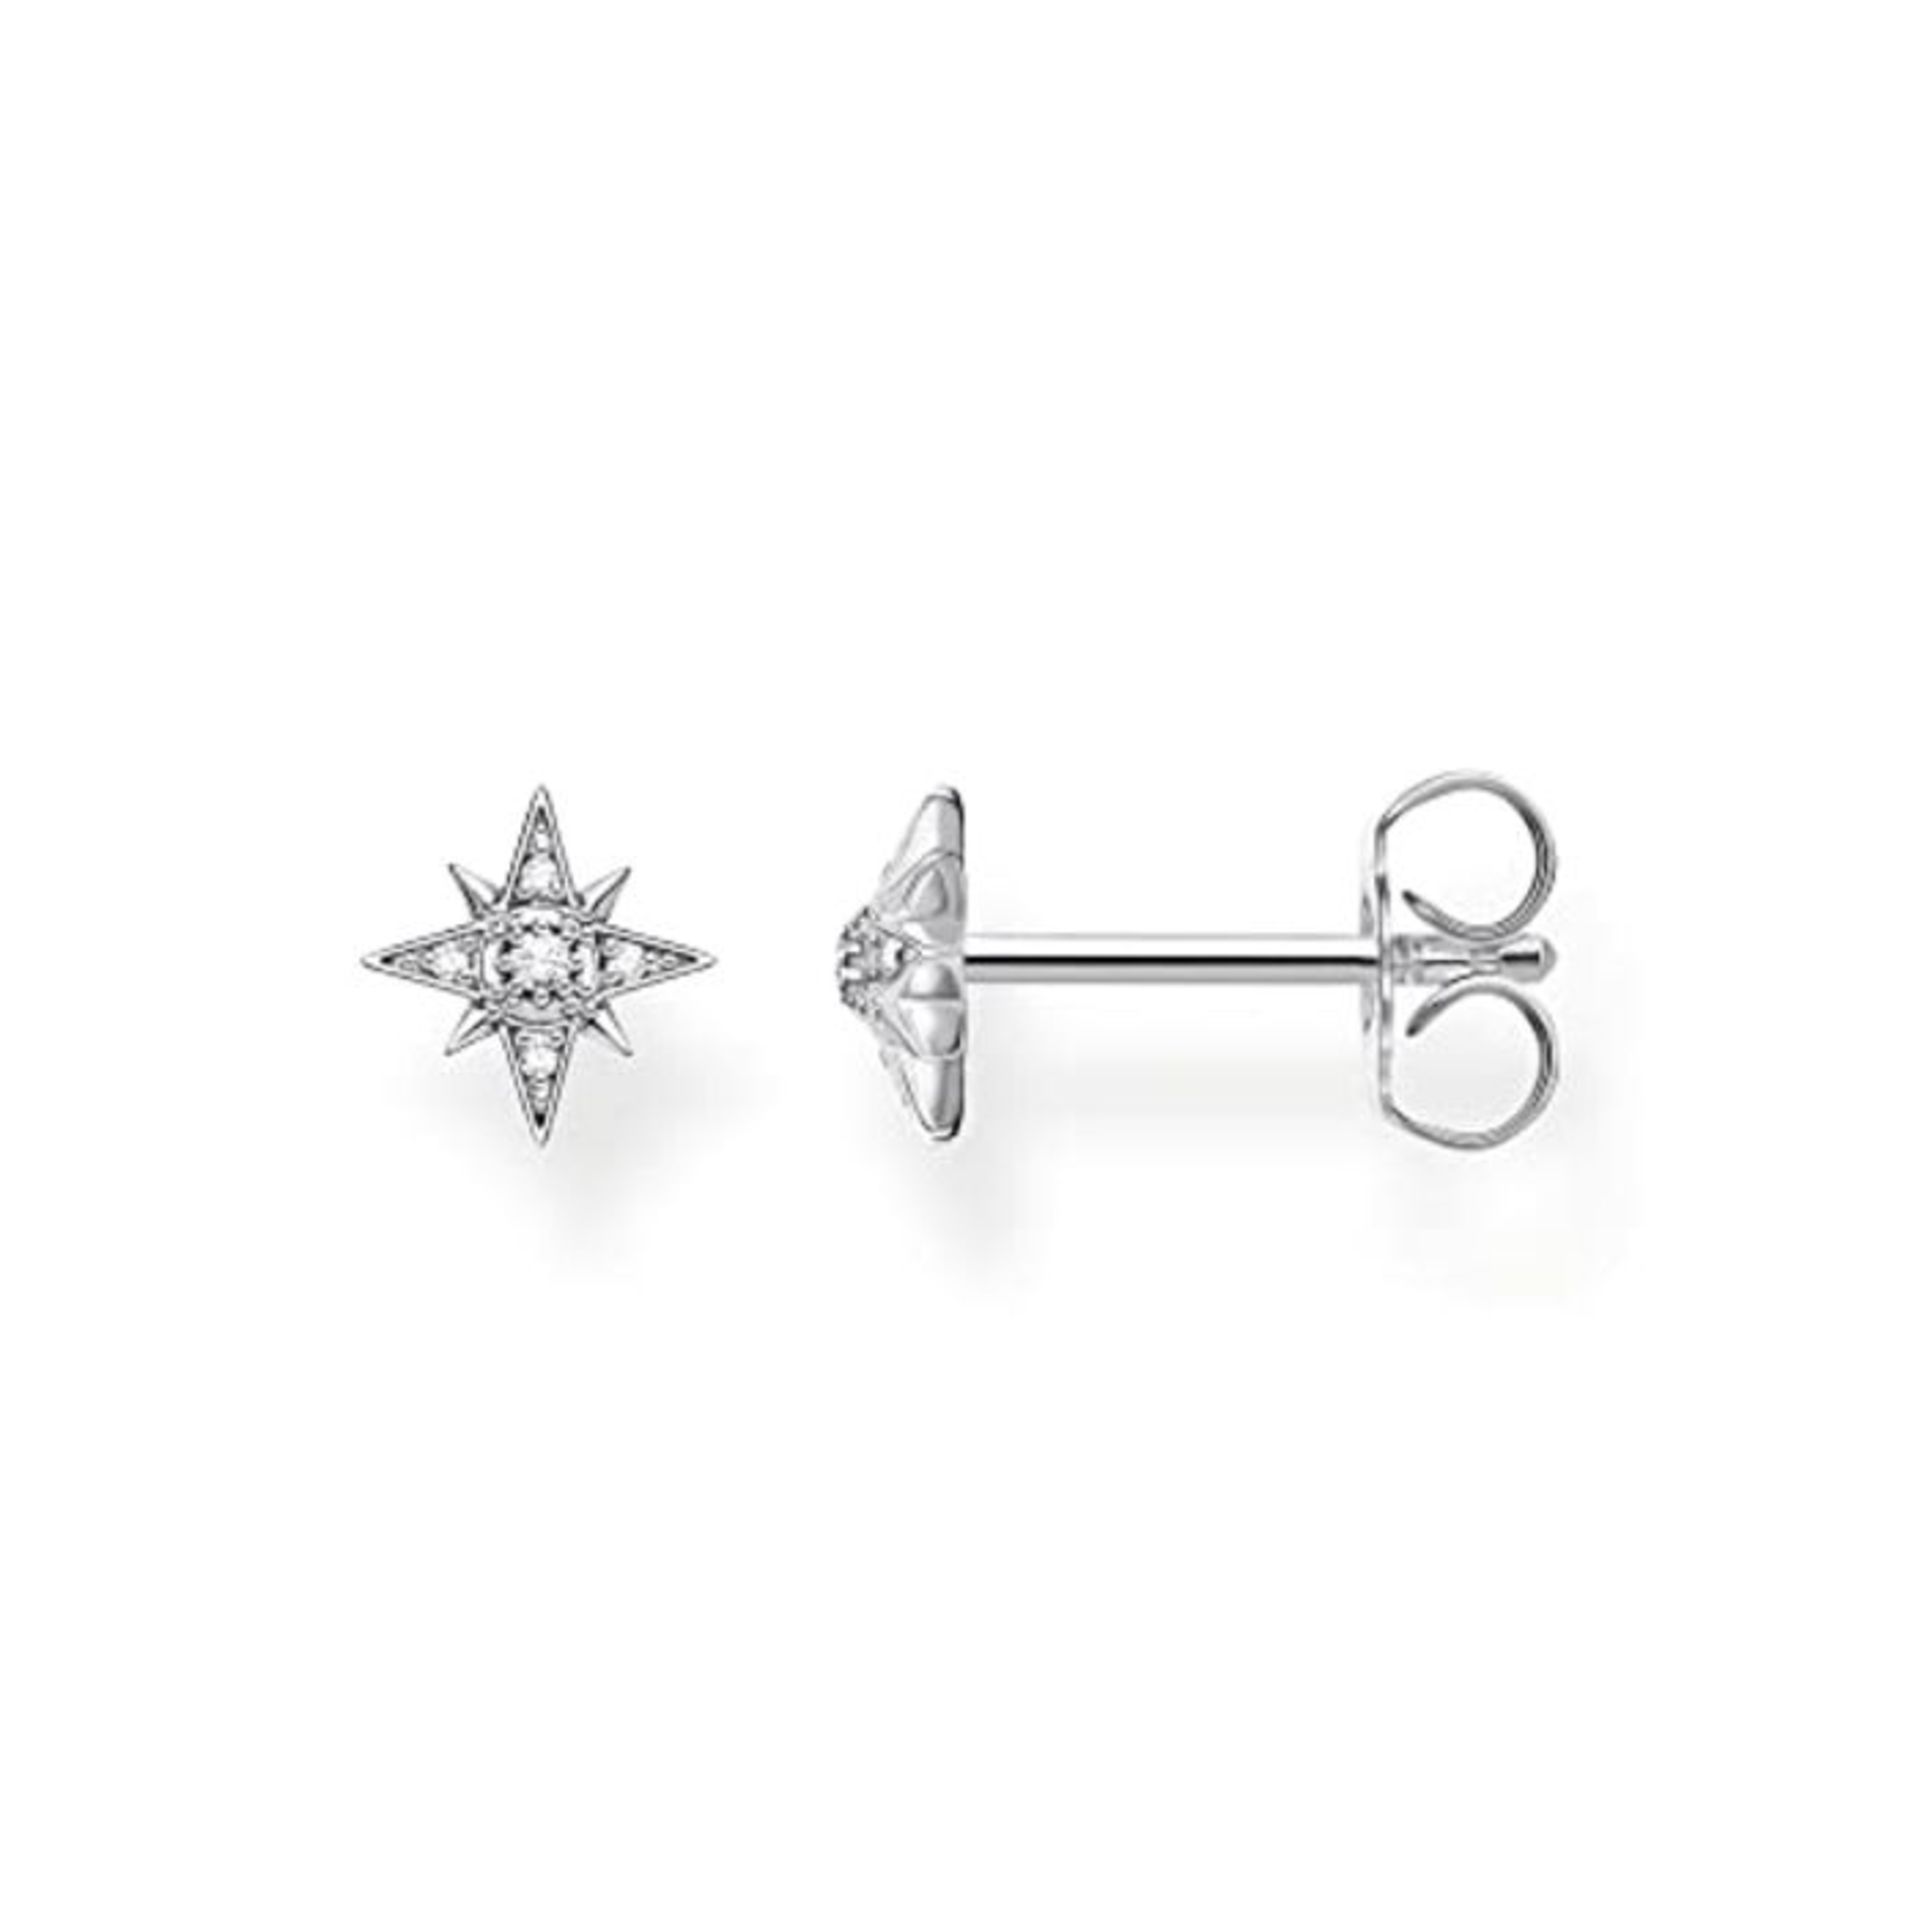 Thomas Sabo Women's Single Stud Earring Star Silver 925 Sterling Silver